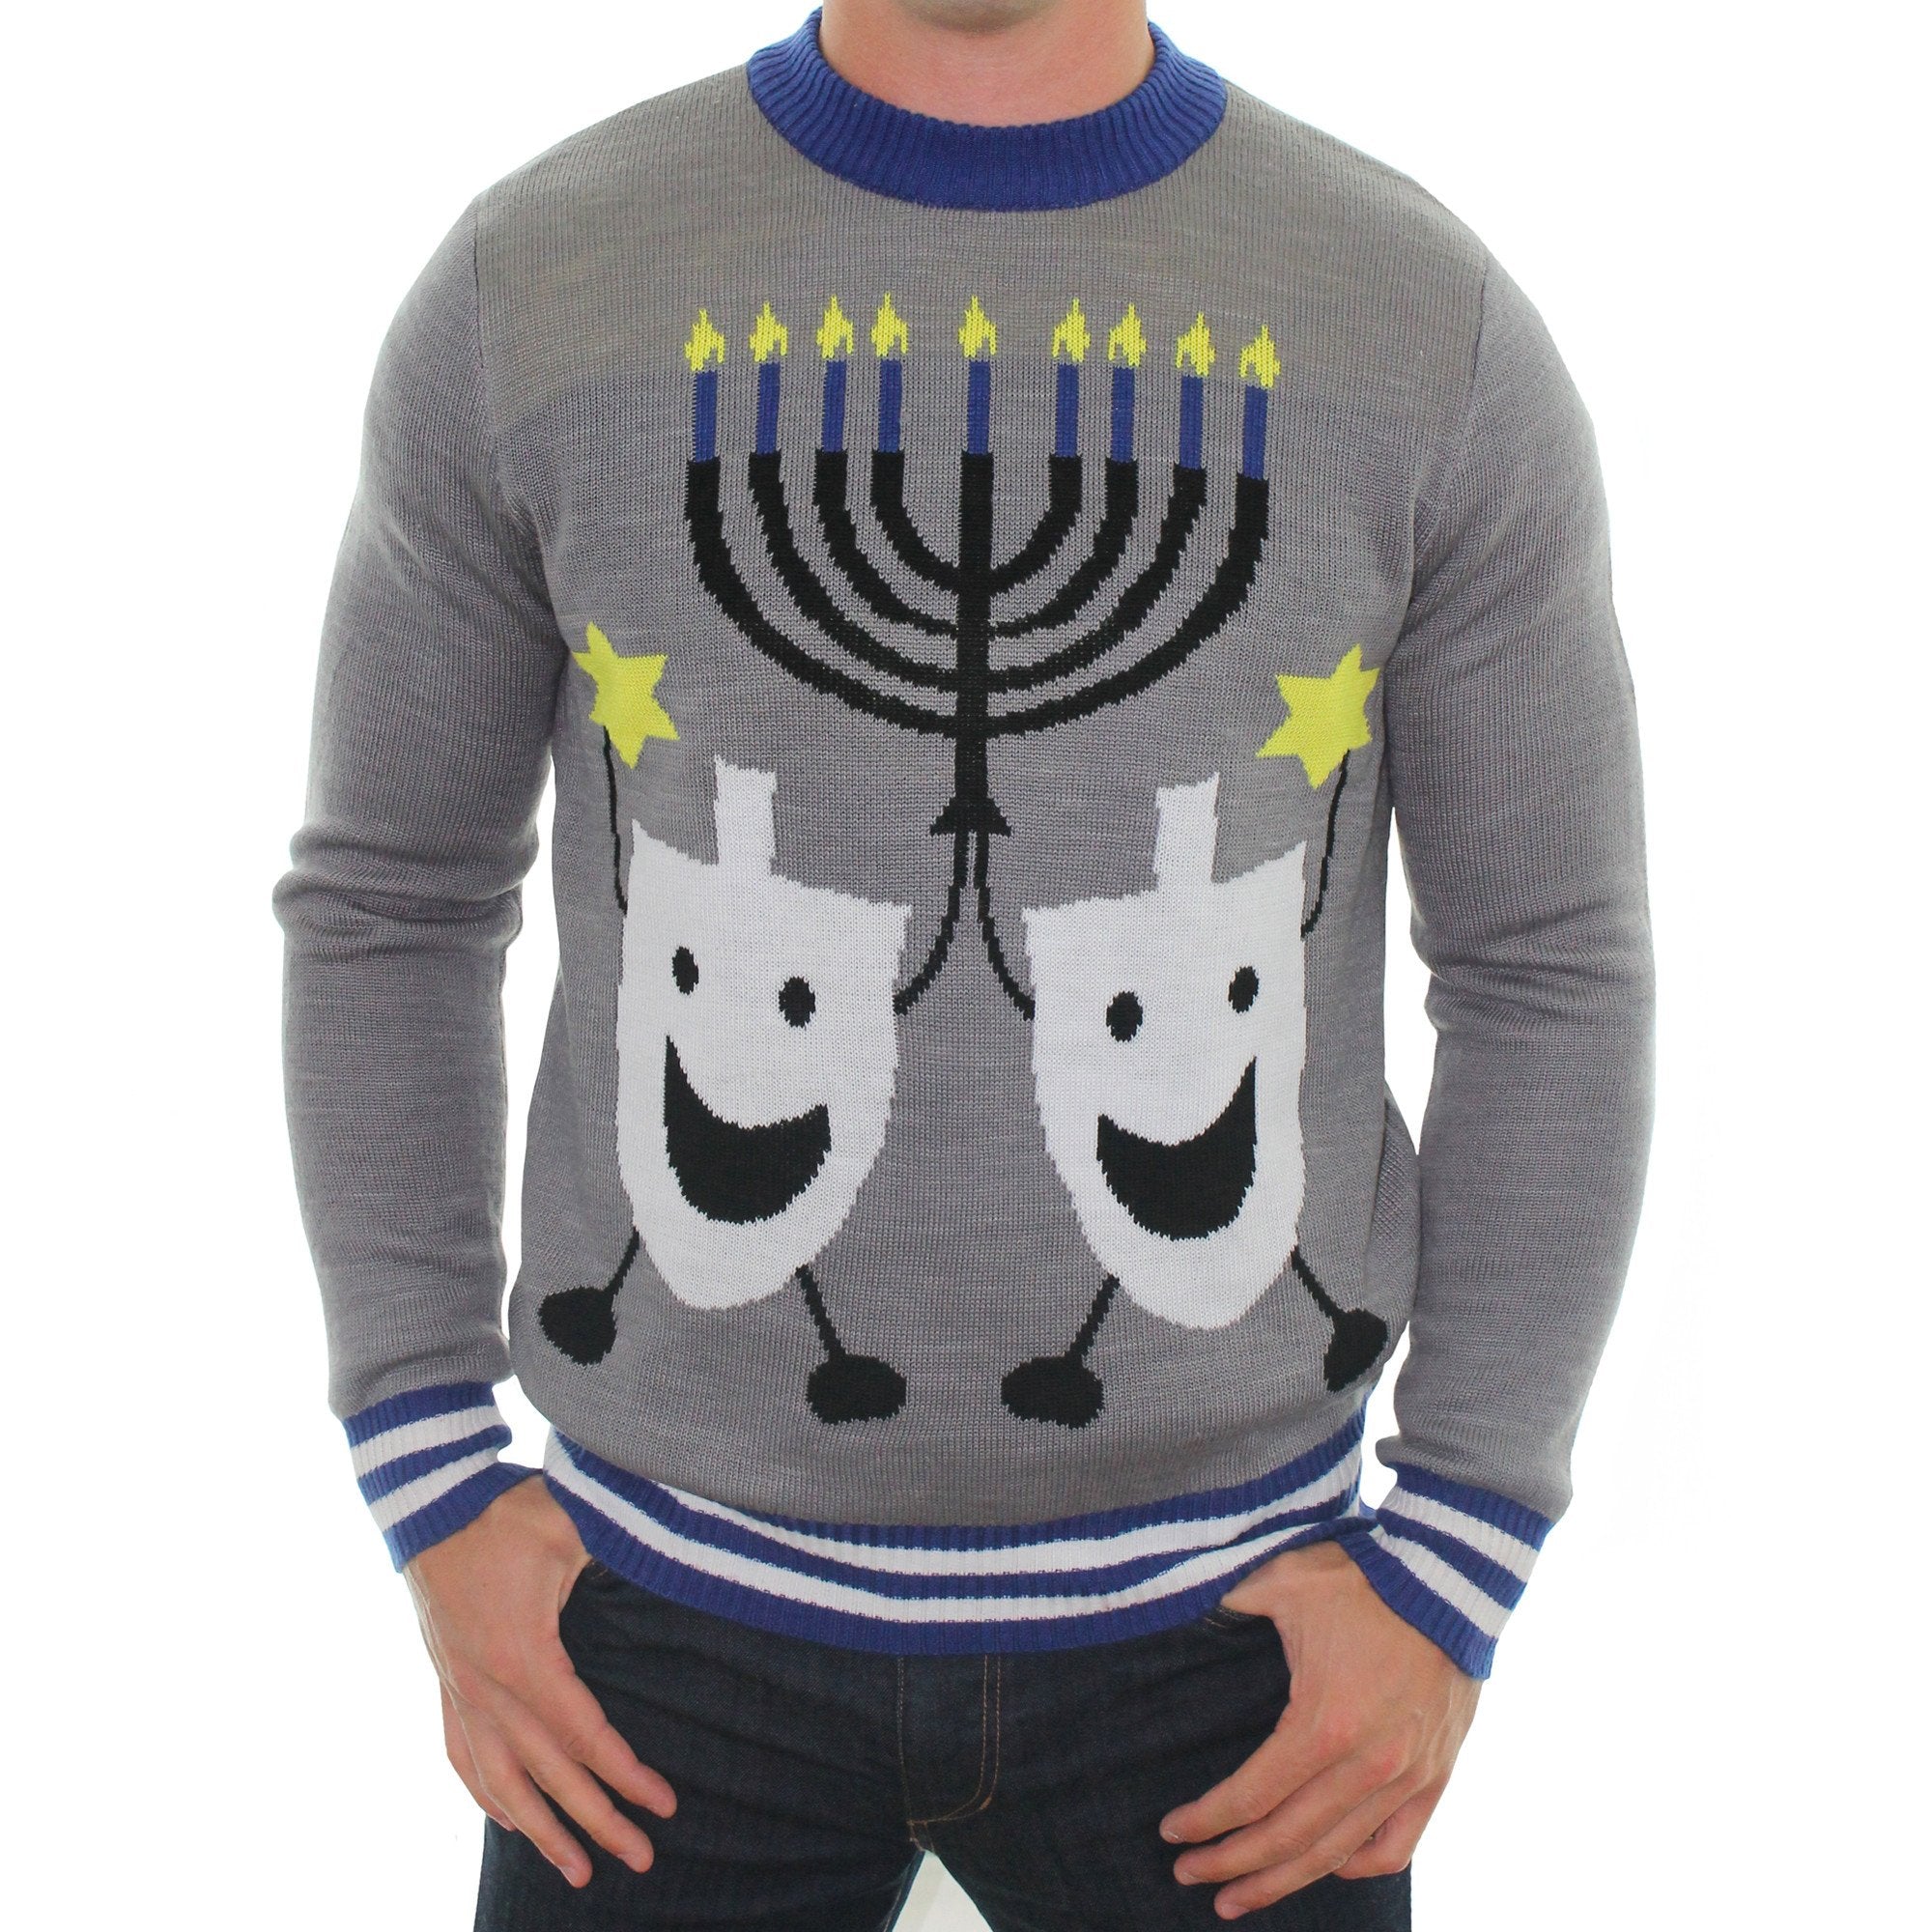 The Hanukkah Sweater Tacky Cheap Bad Jumpers